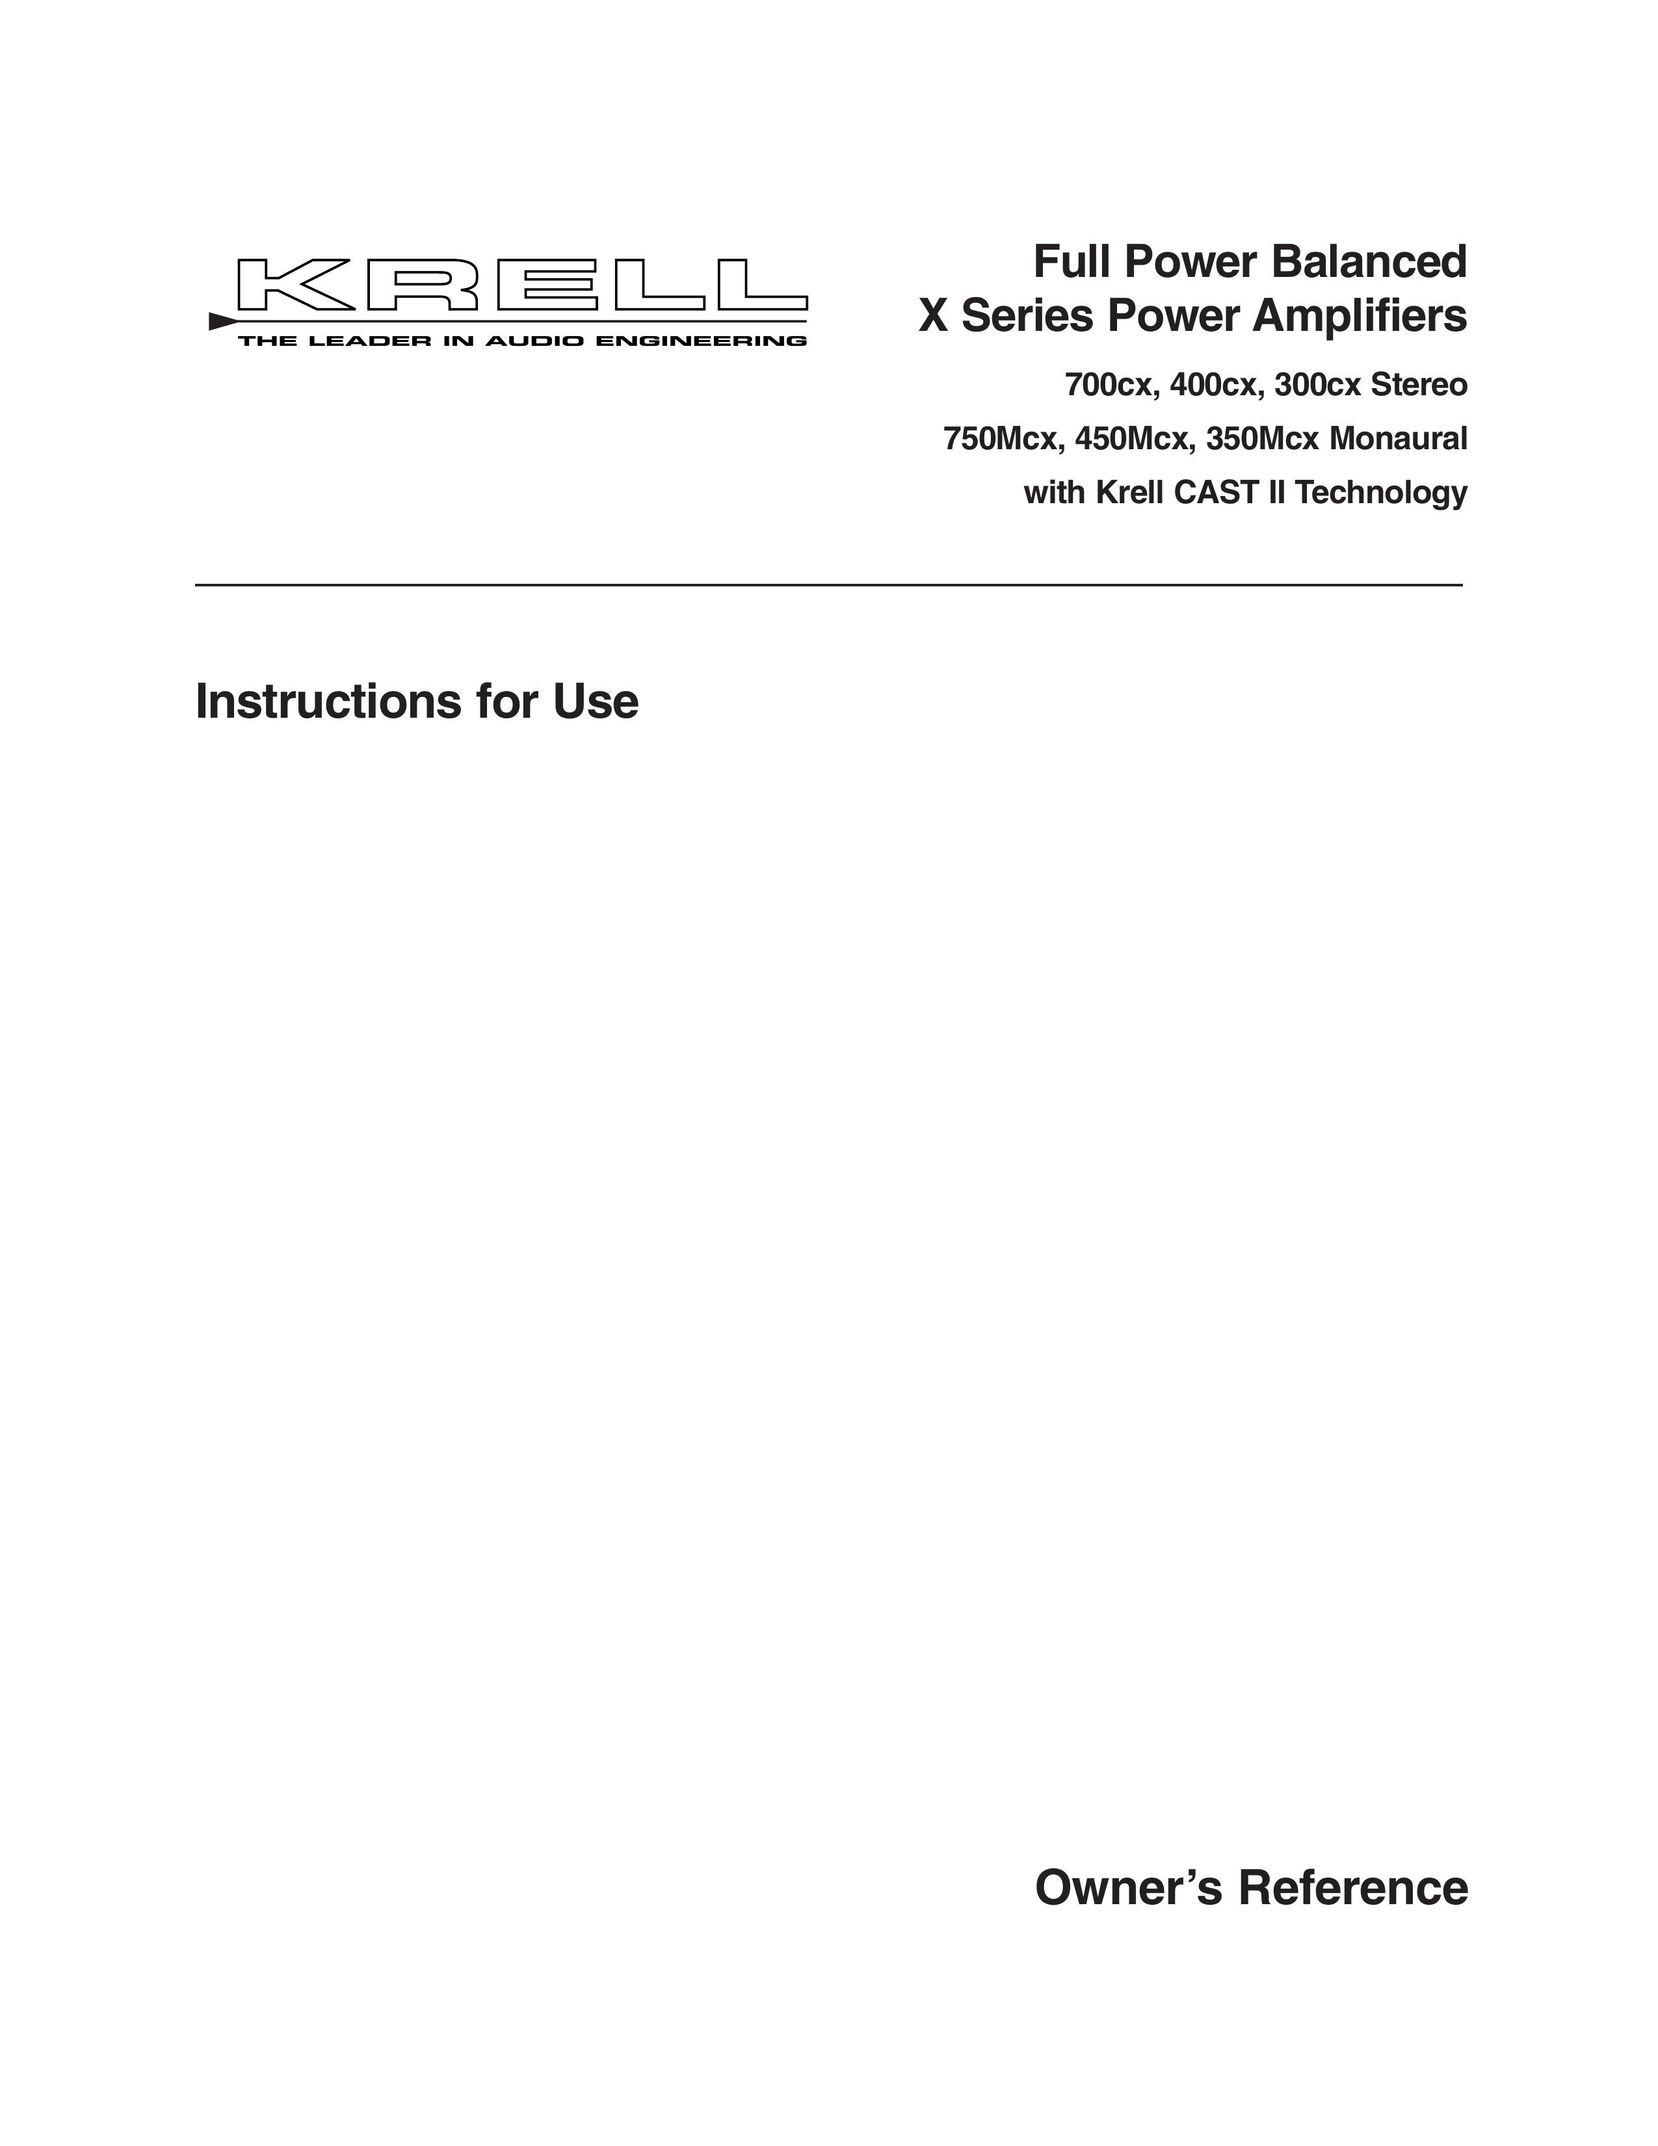 Krell Industries 450Mcx Stereo Amplifier User Manual